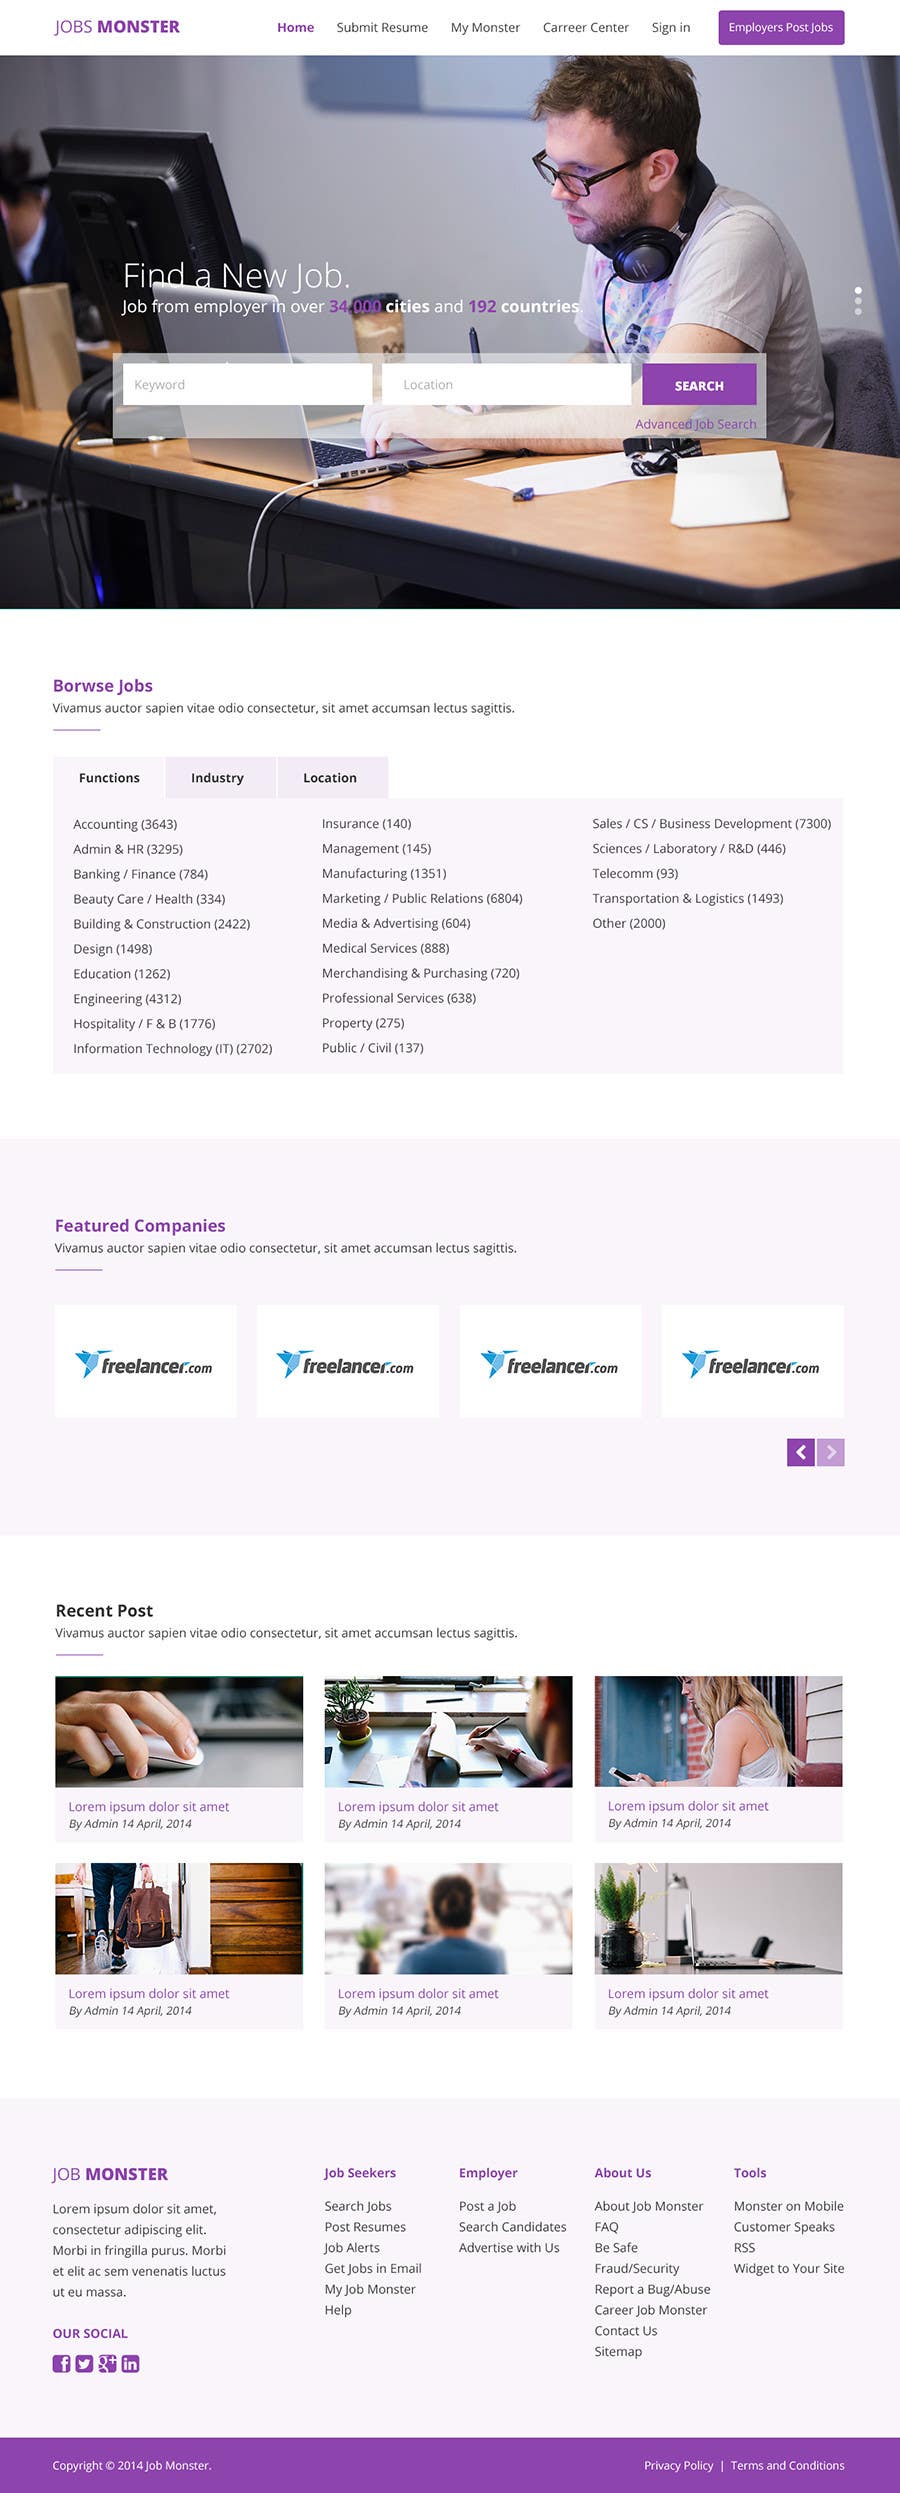 Wasilisho la Shindano #36 la                                                 E@SY - Design a Few Web Pages for Website Mockup for Job Board & FORGET Monster.com
                                            